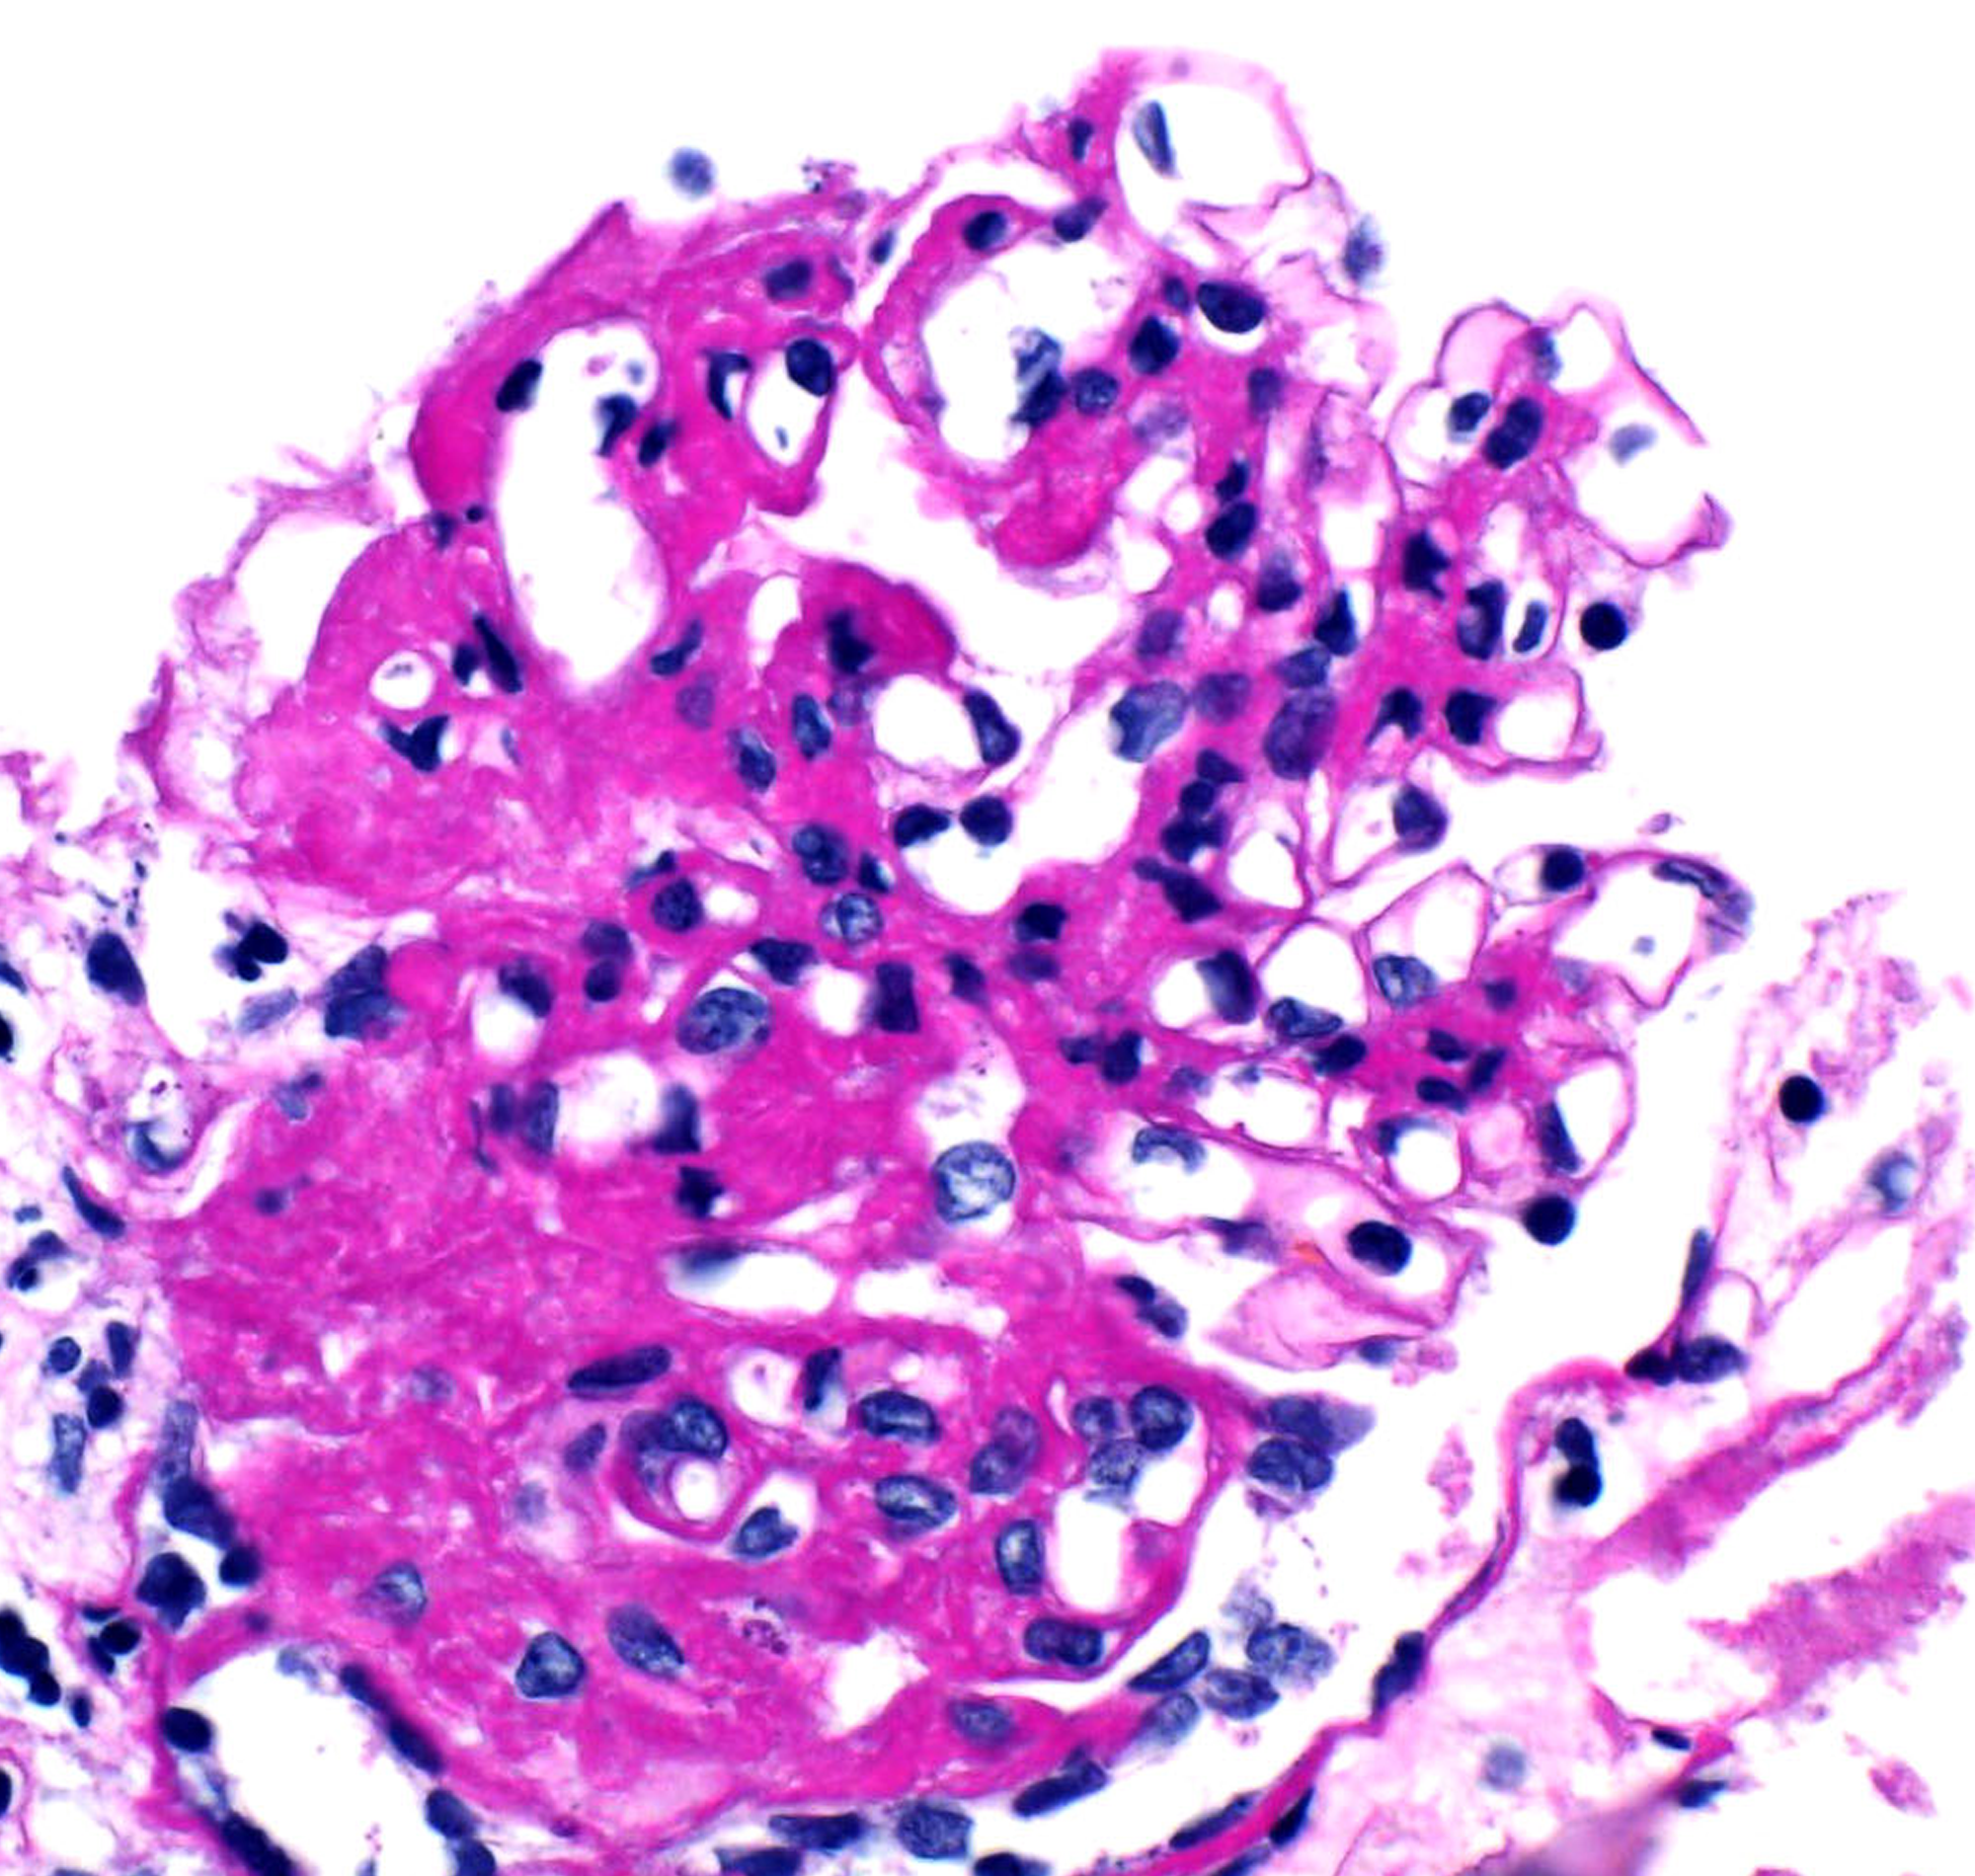 glomerulus from a renal biopsy taken by Arkana laboratories